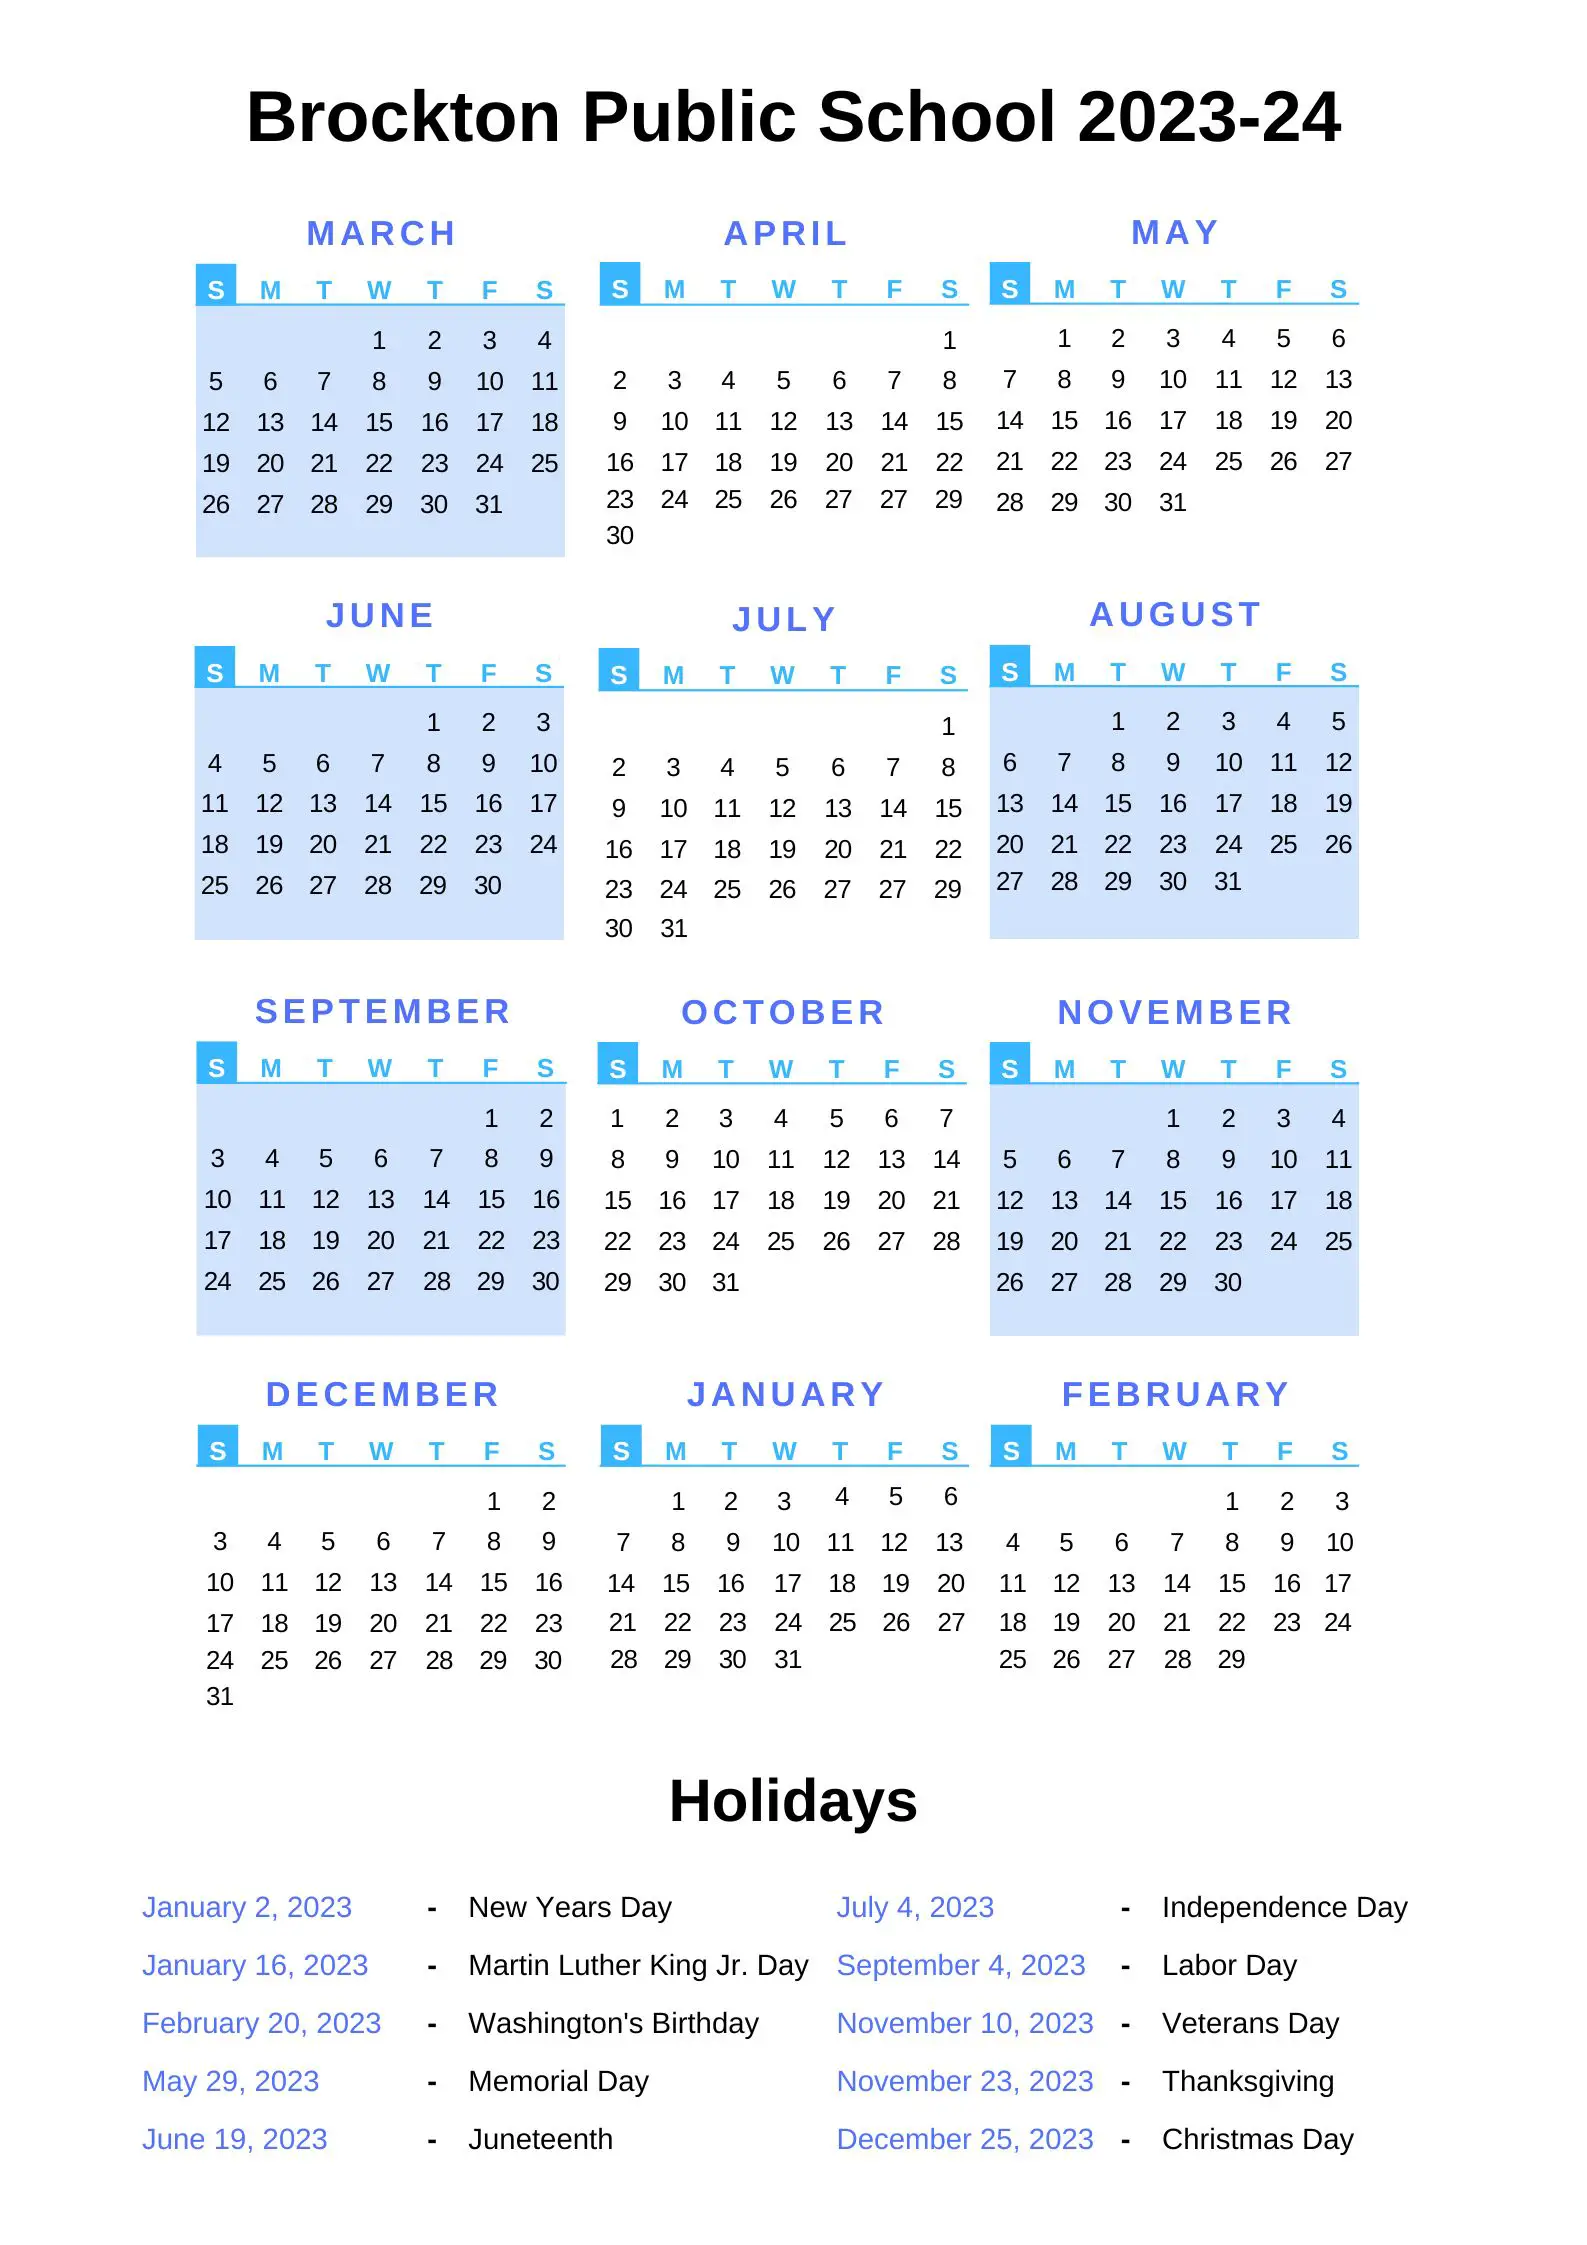 brockton-public-schools-calendar-with-holidays-2023-2024